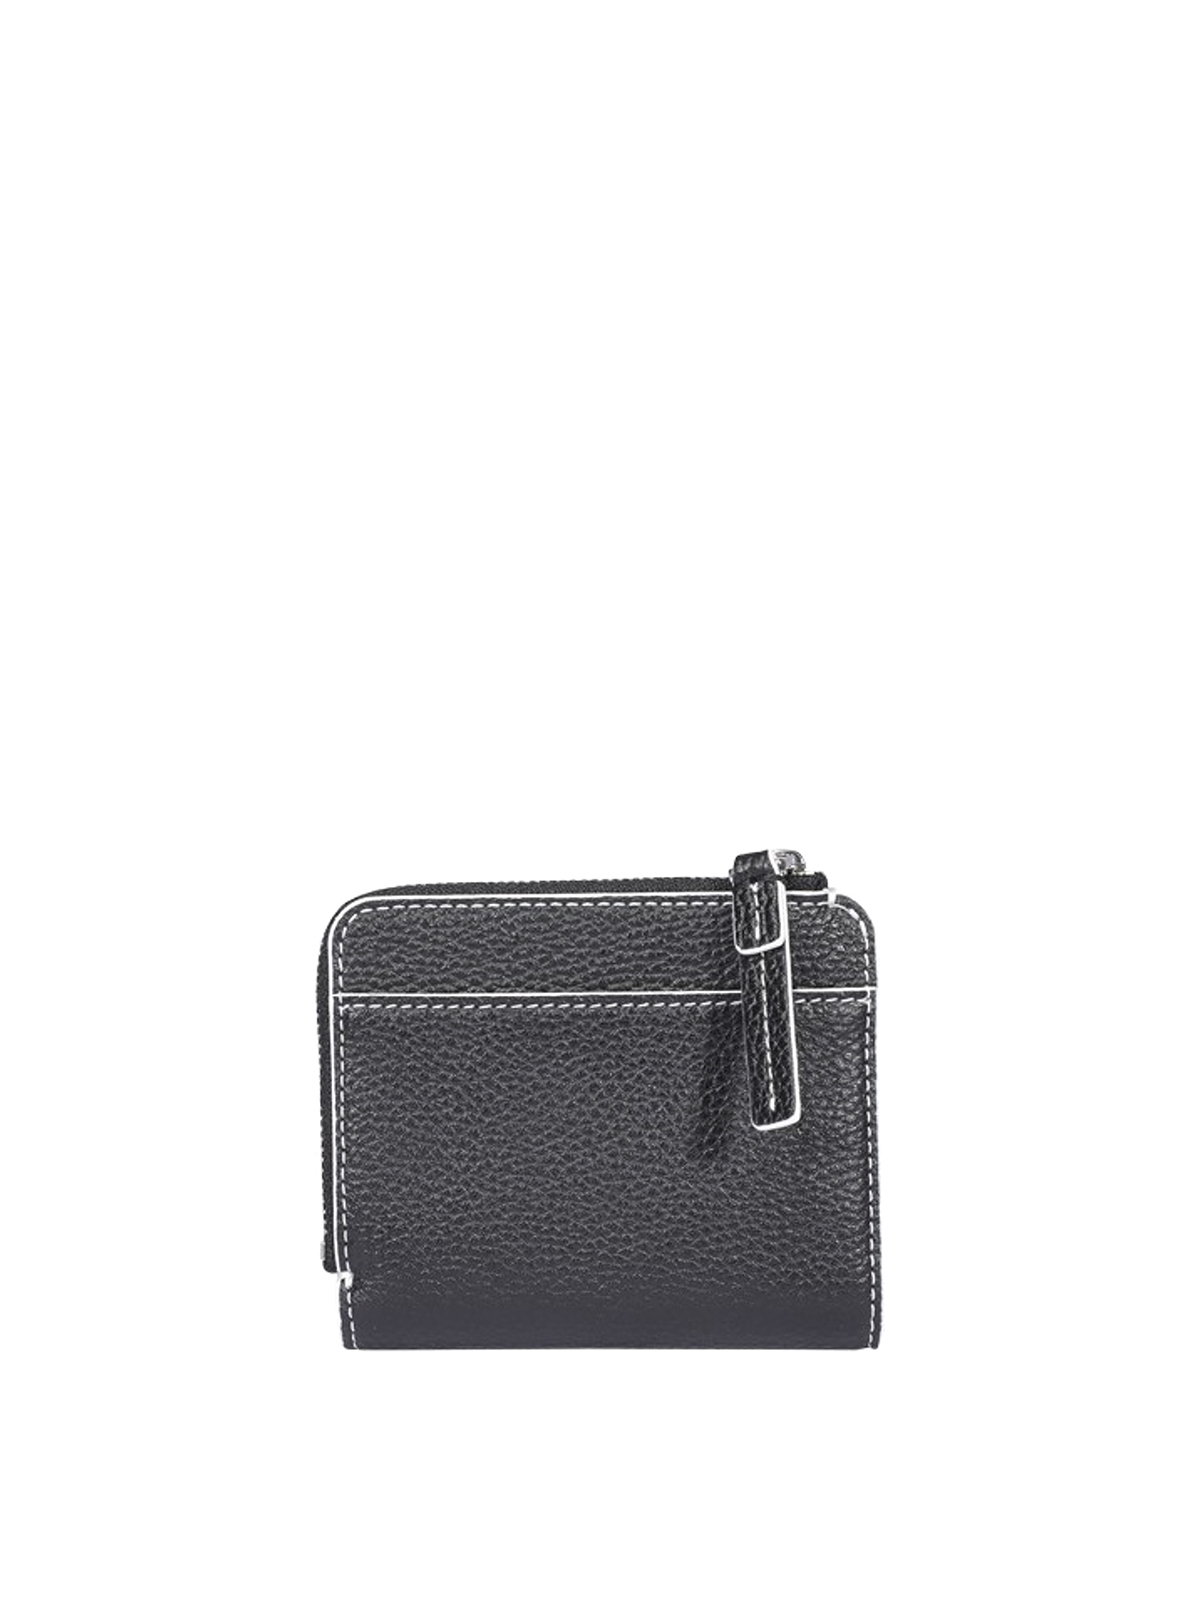 The Marc Jacobs Zip Croc-Embossed Leather Wallet Black